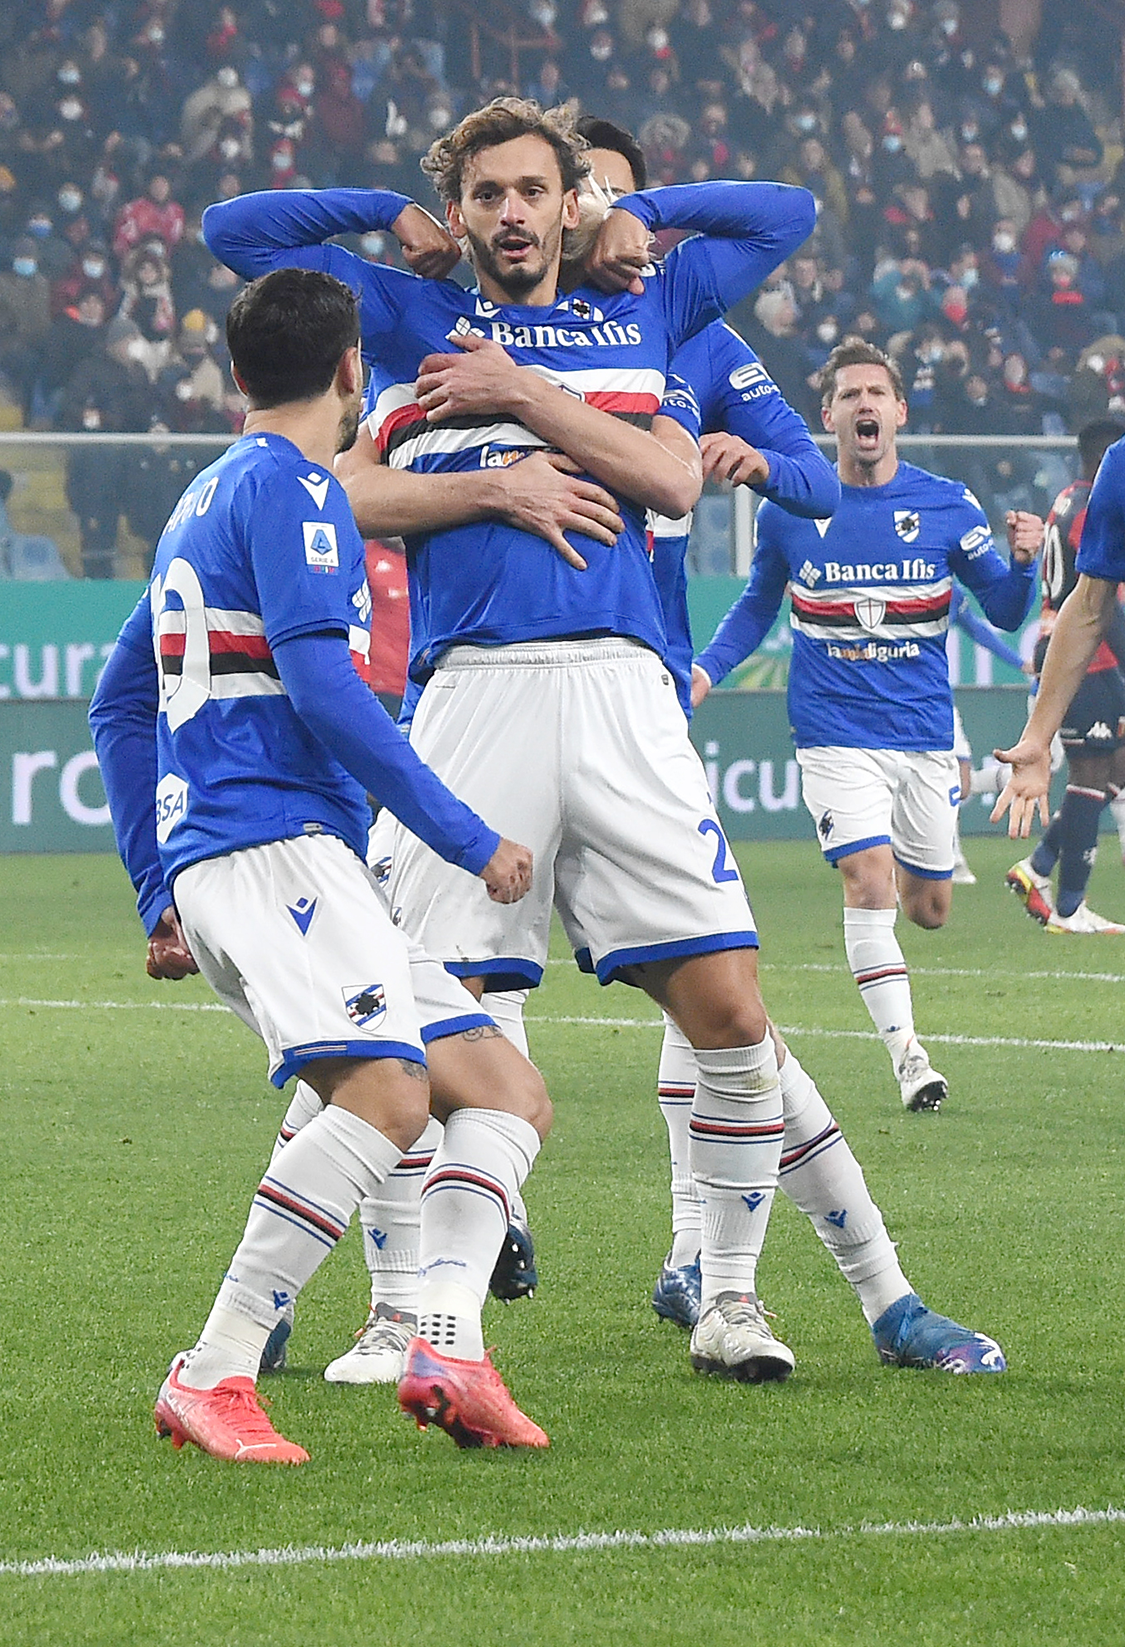 Genoa 1-3 Sampdoria, Samp earn bragging rights in huge derby win